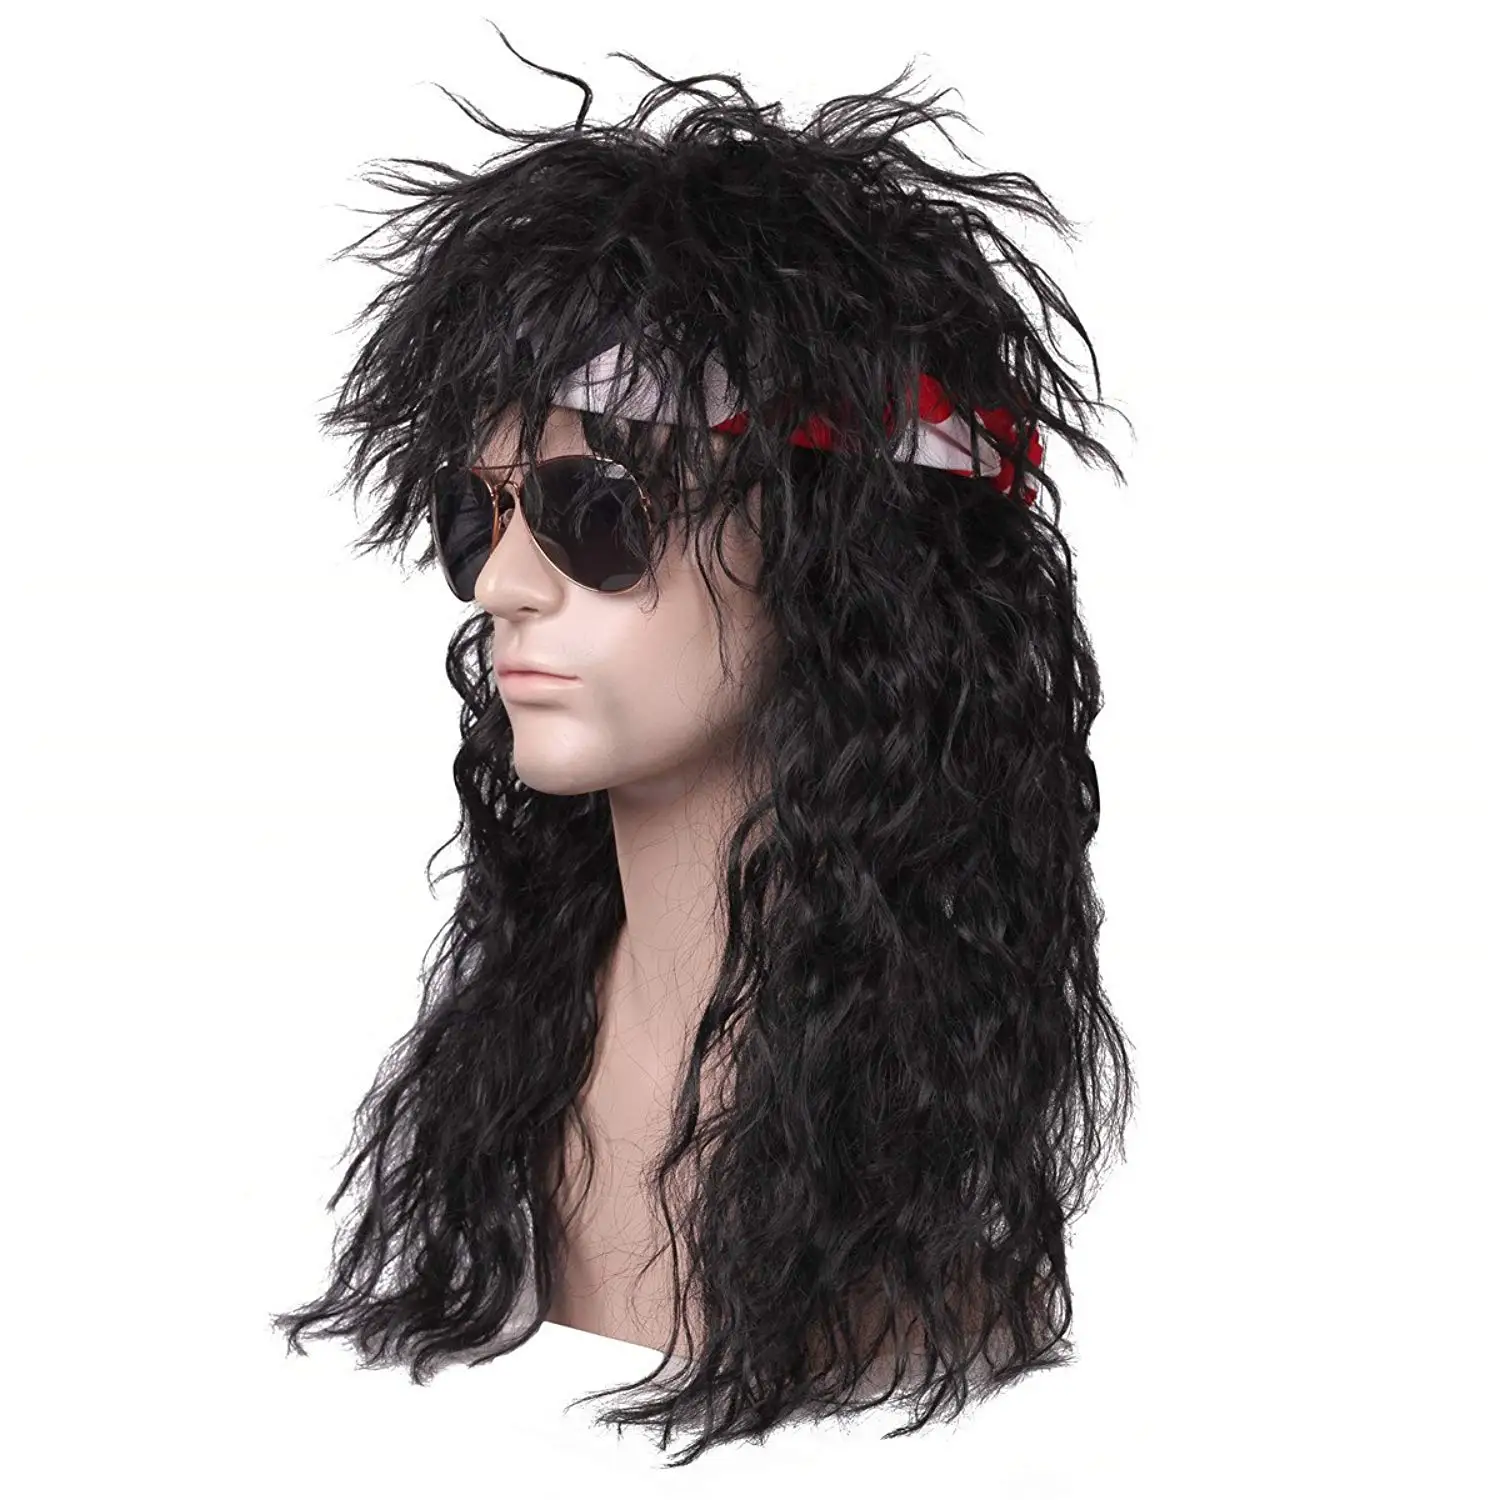 Bandana 4 pc Sunglasses Mens Wig Costume Multiple Colors Premium 80s Rocker Wig